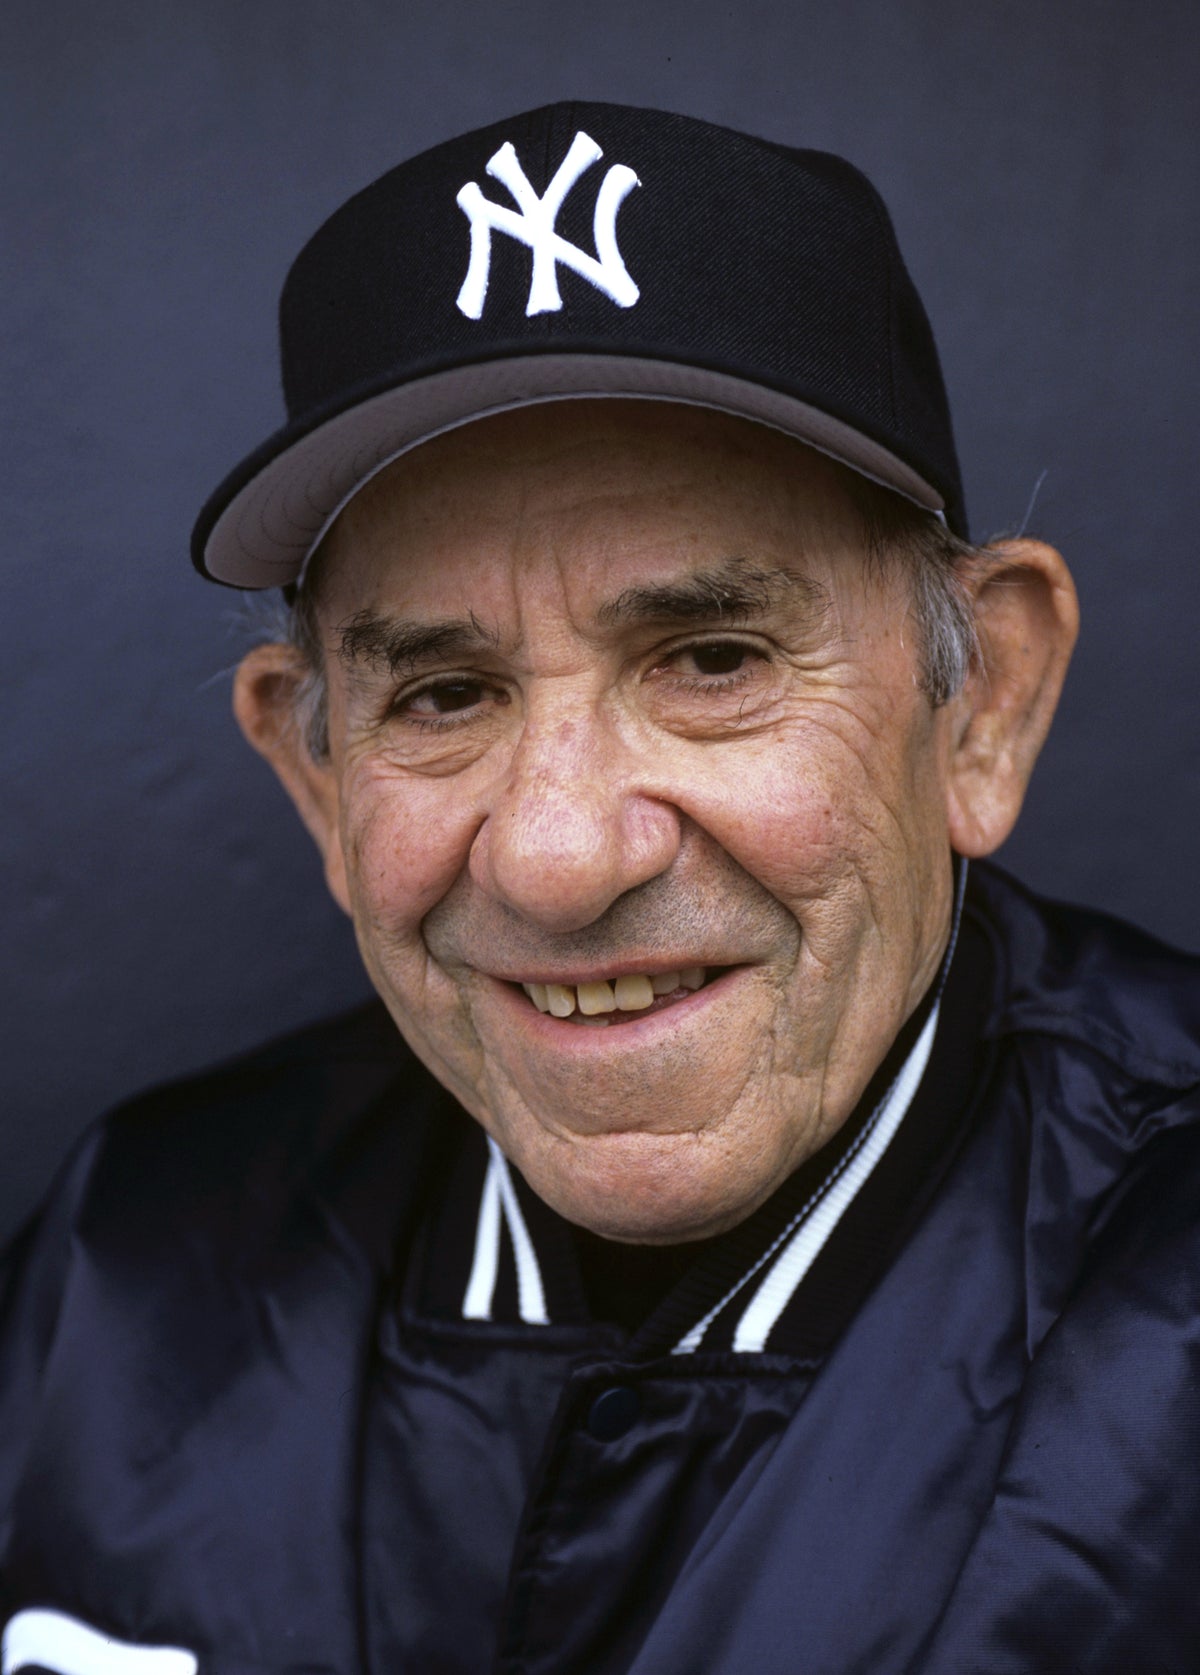 Yogi Berra Portrait, Spring Training